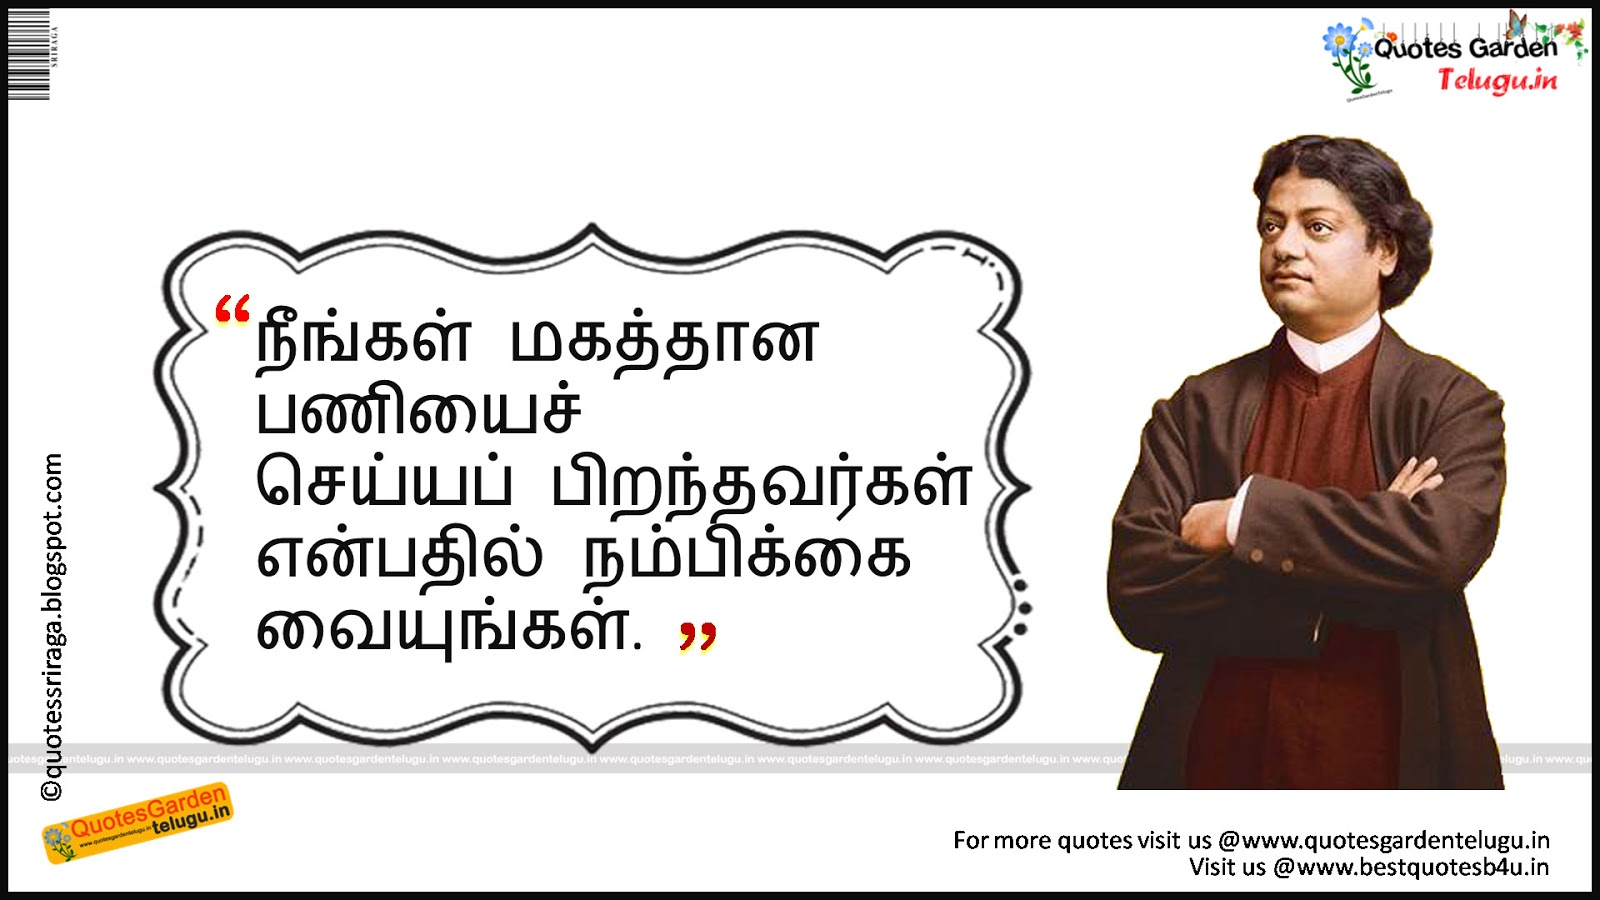 Inspiring Tamil Quotes from Swami Vivekananda | QUOTES GARDEN ...